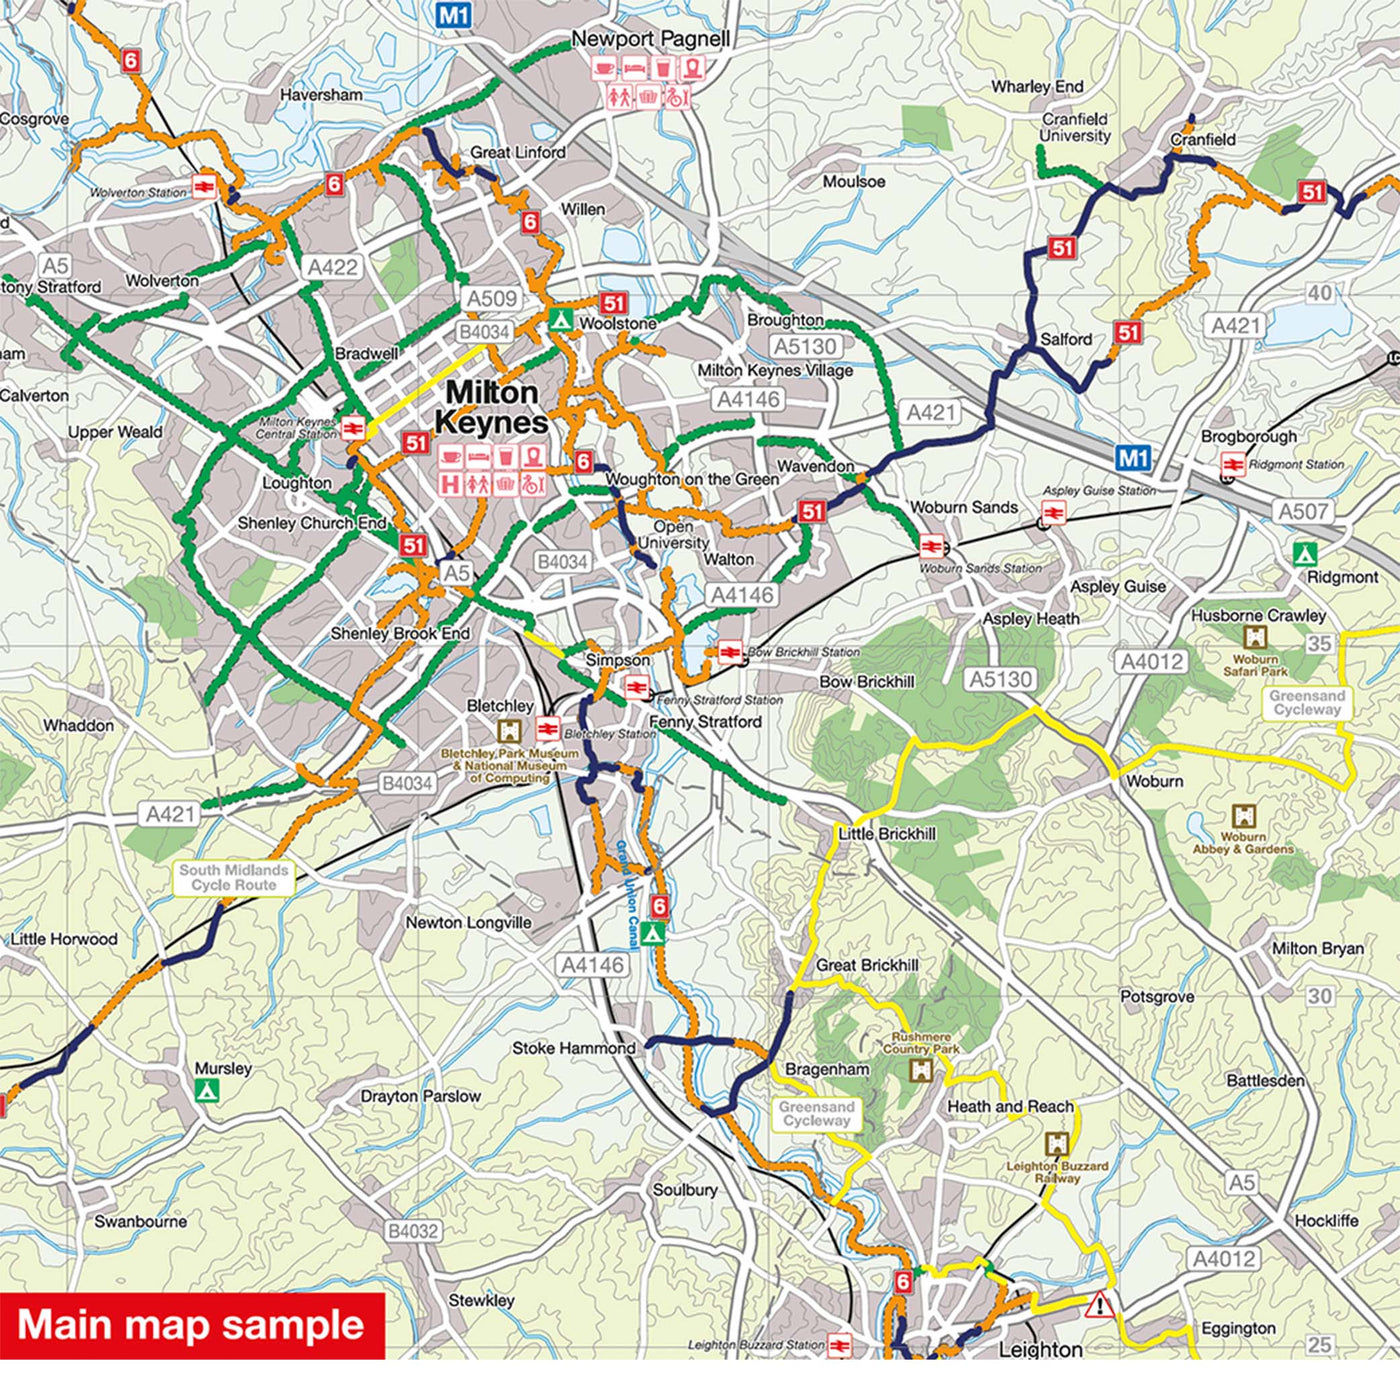 Main map sample: Milton Keynes 